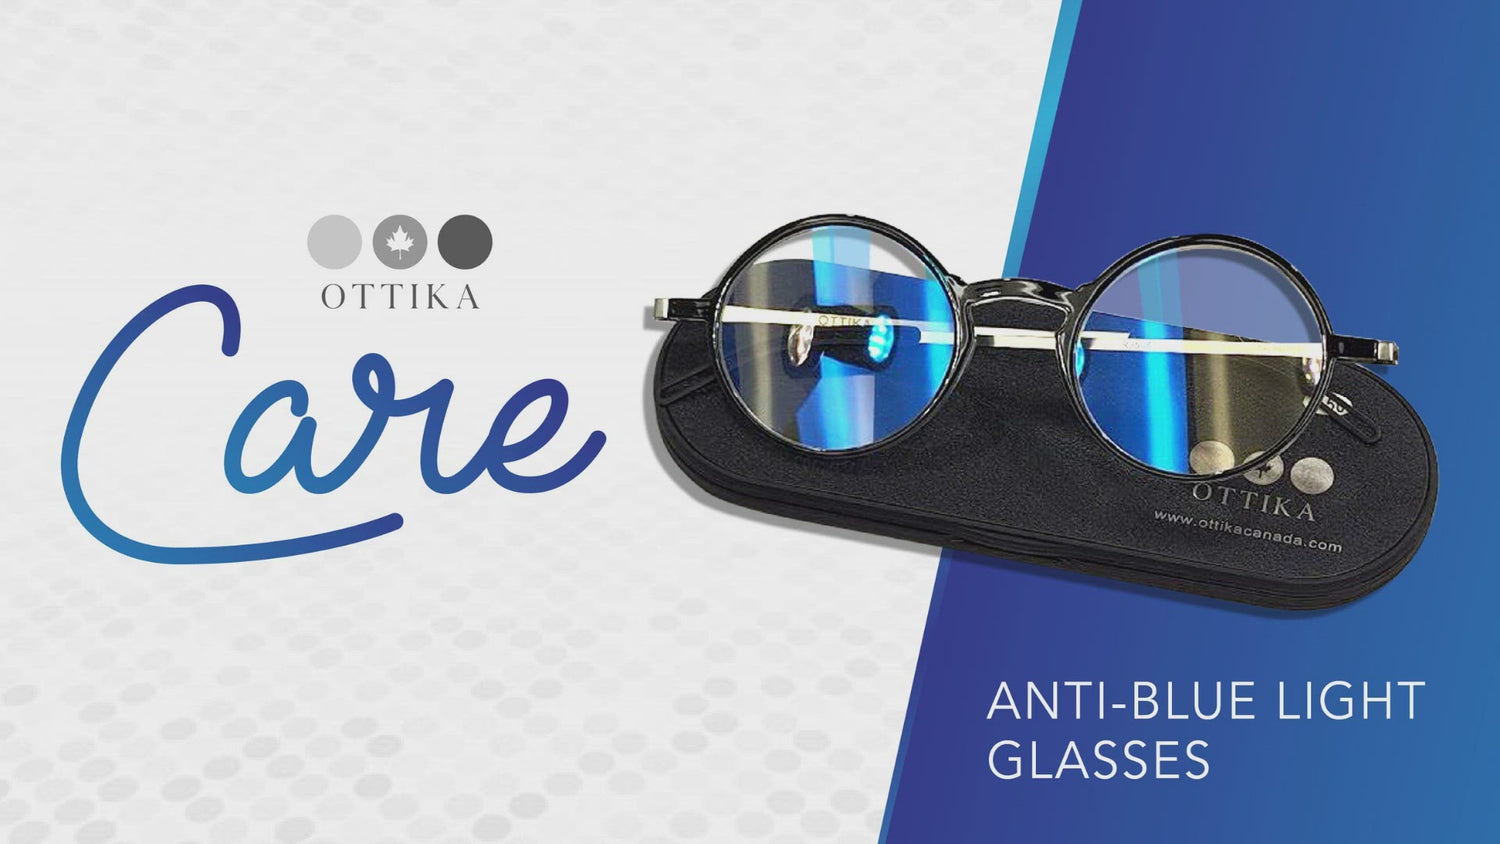 Ottika Care - Occhiali anti luce blu | Modello N1001